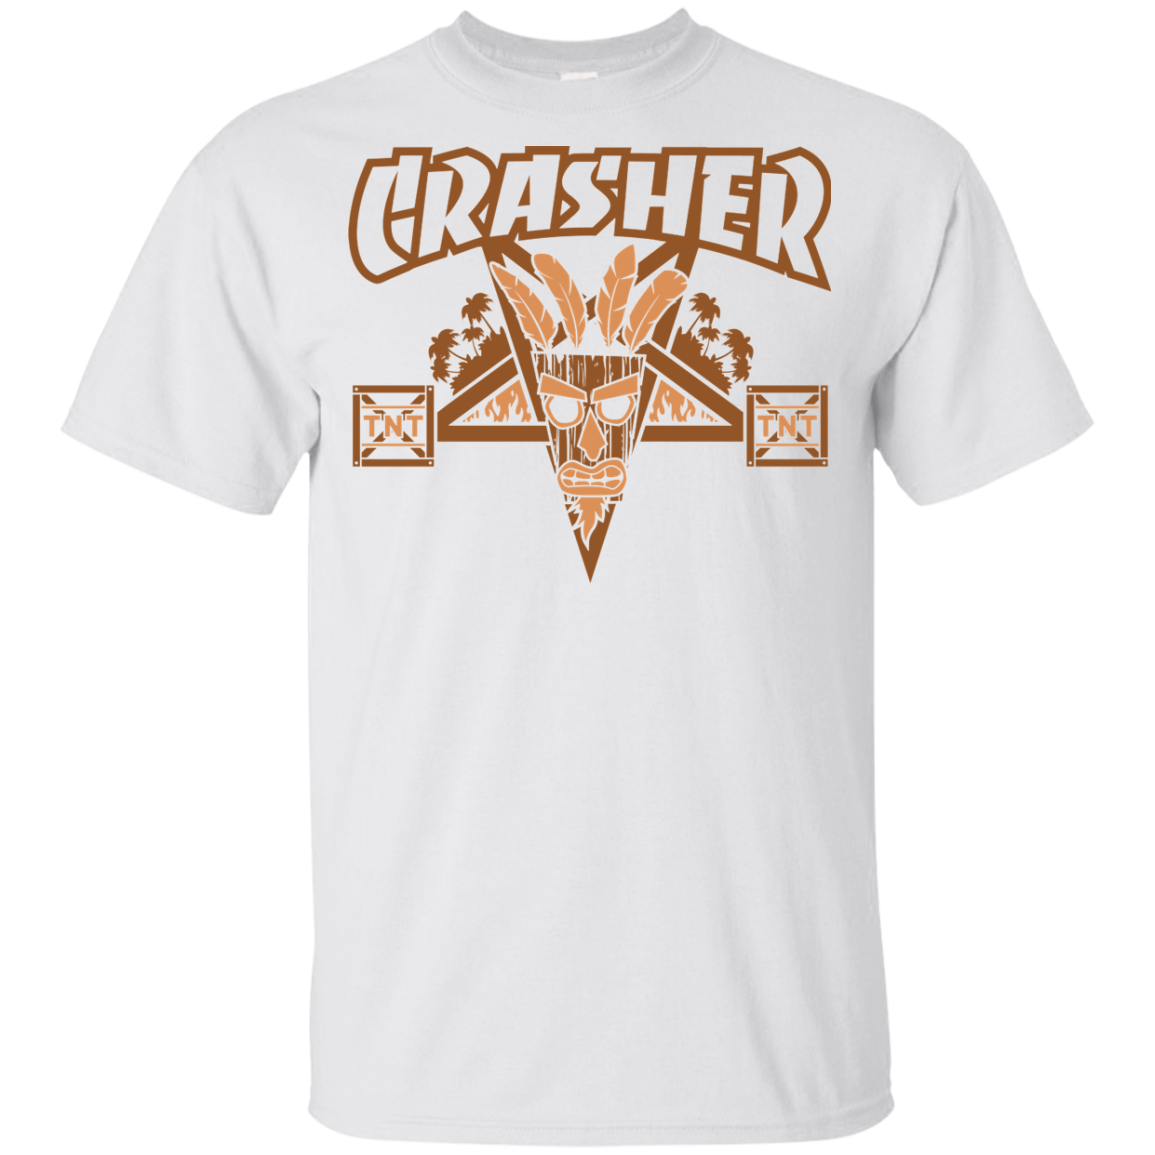 CRASHER Youth T-Shirt